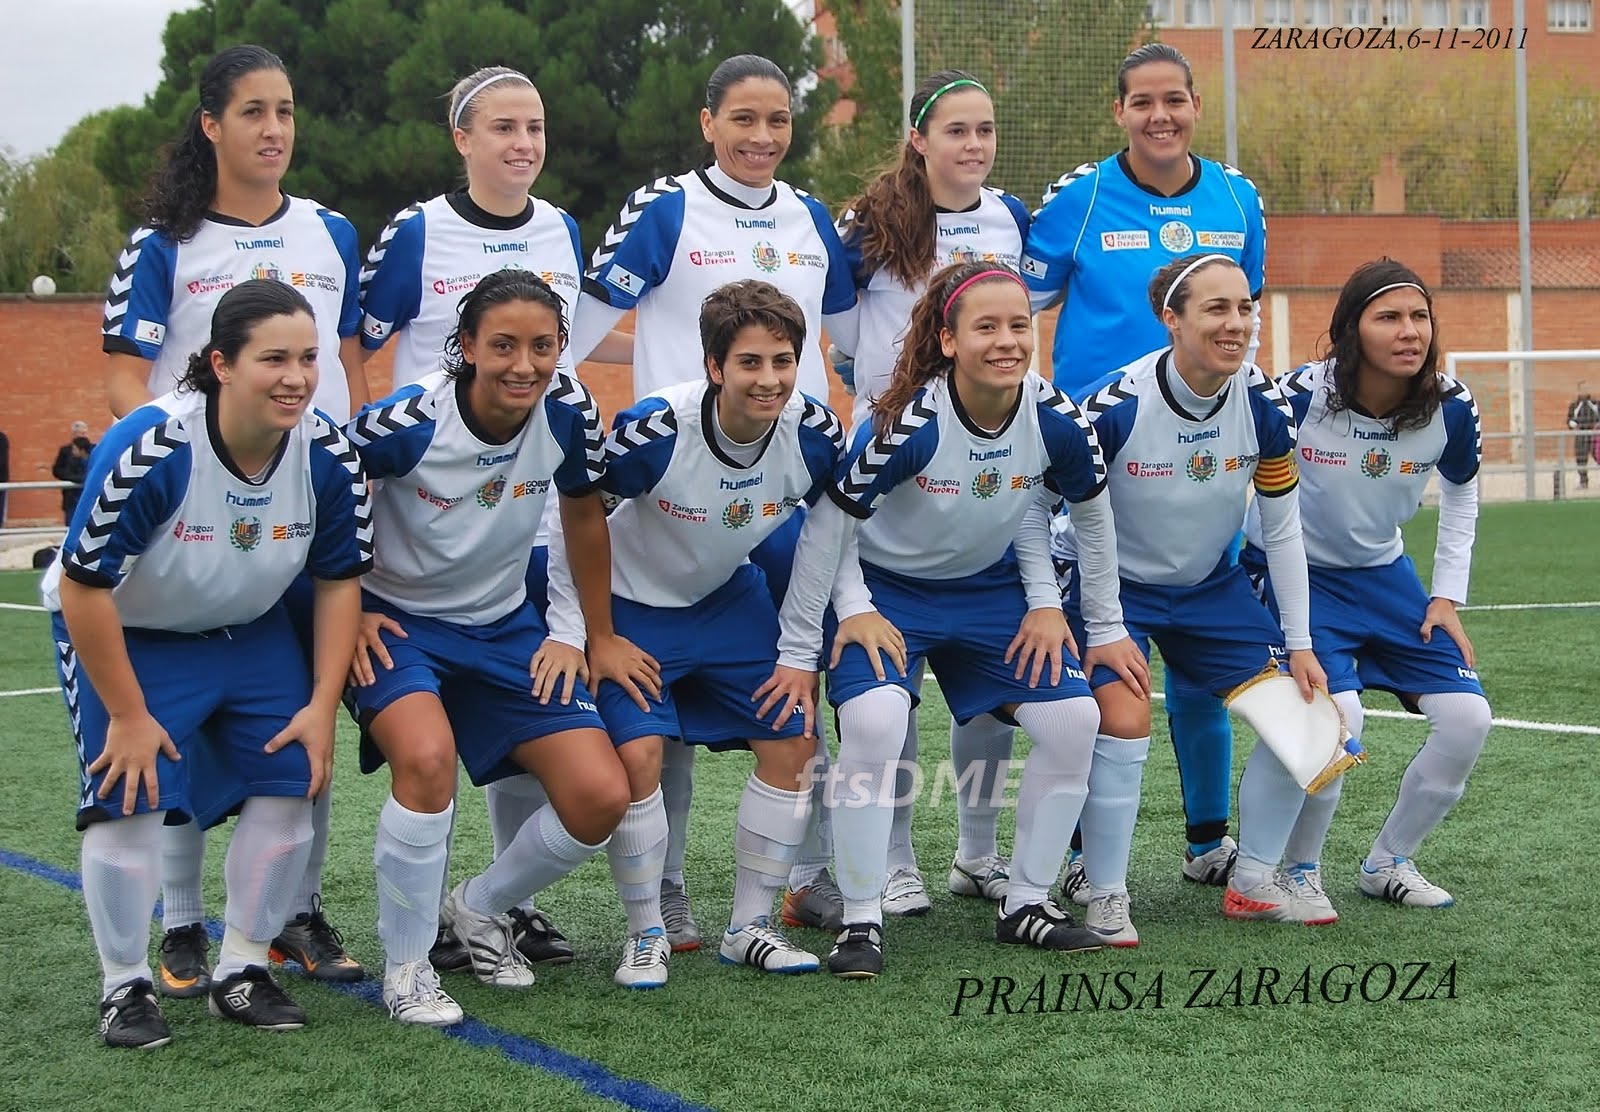 Fútbol Femenino...el futuro es nuestro.: C.D. PRAINSA ZARAGOZA 0 - F.C. BARCELONA 41600 x 1112